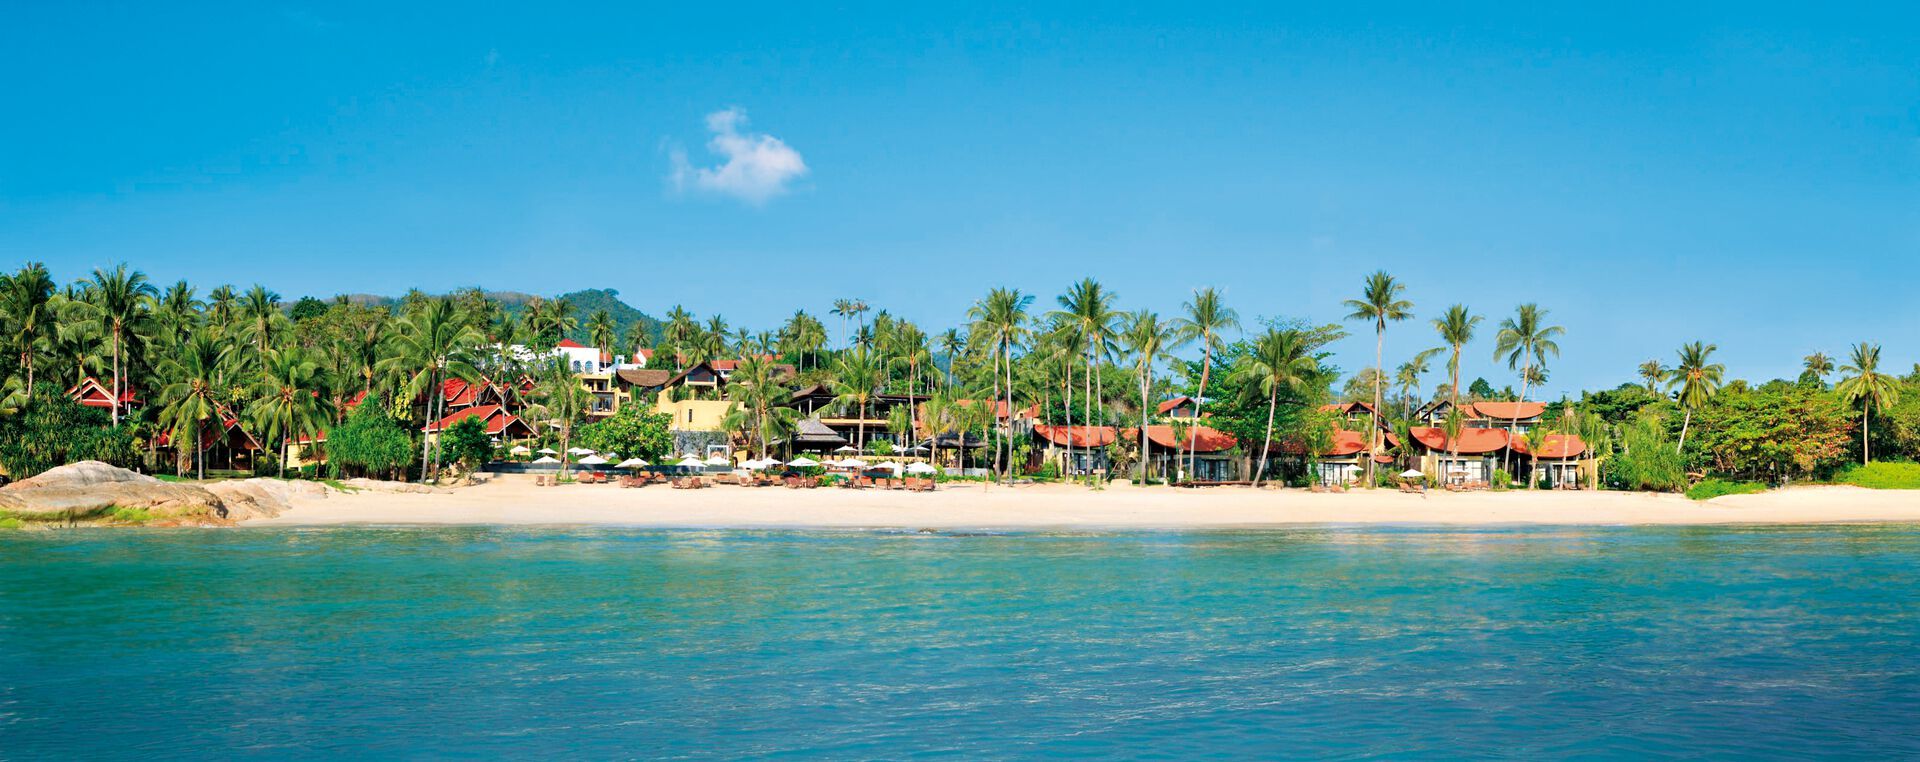 Thaïlande - Koh Samui - Hôtel New Star Beach Resort  - transfert privé inclus - 4*